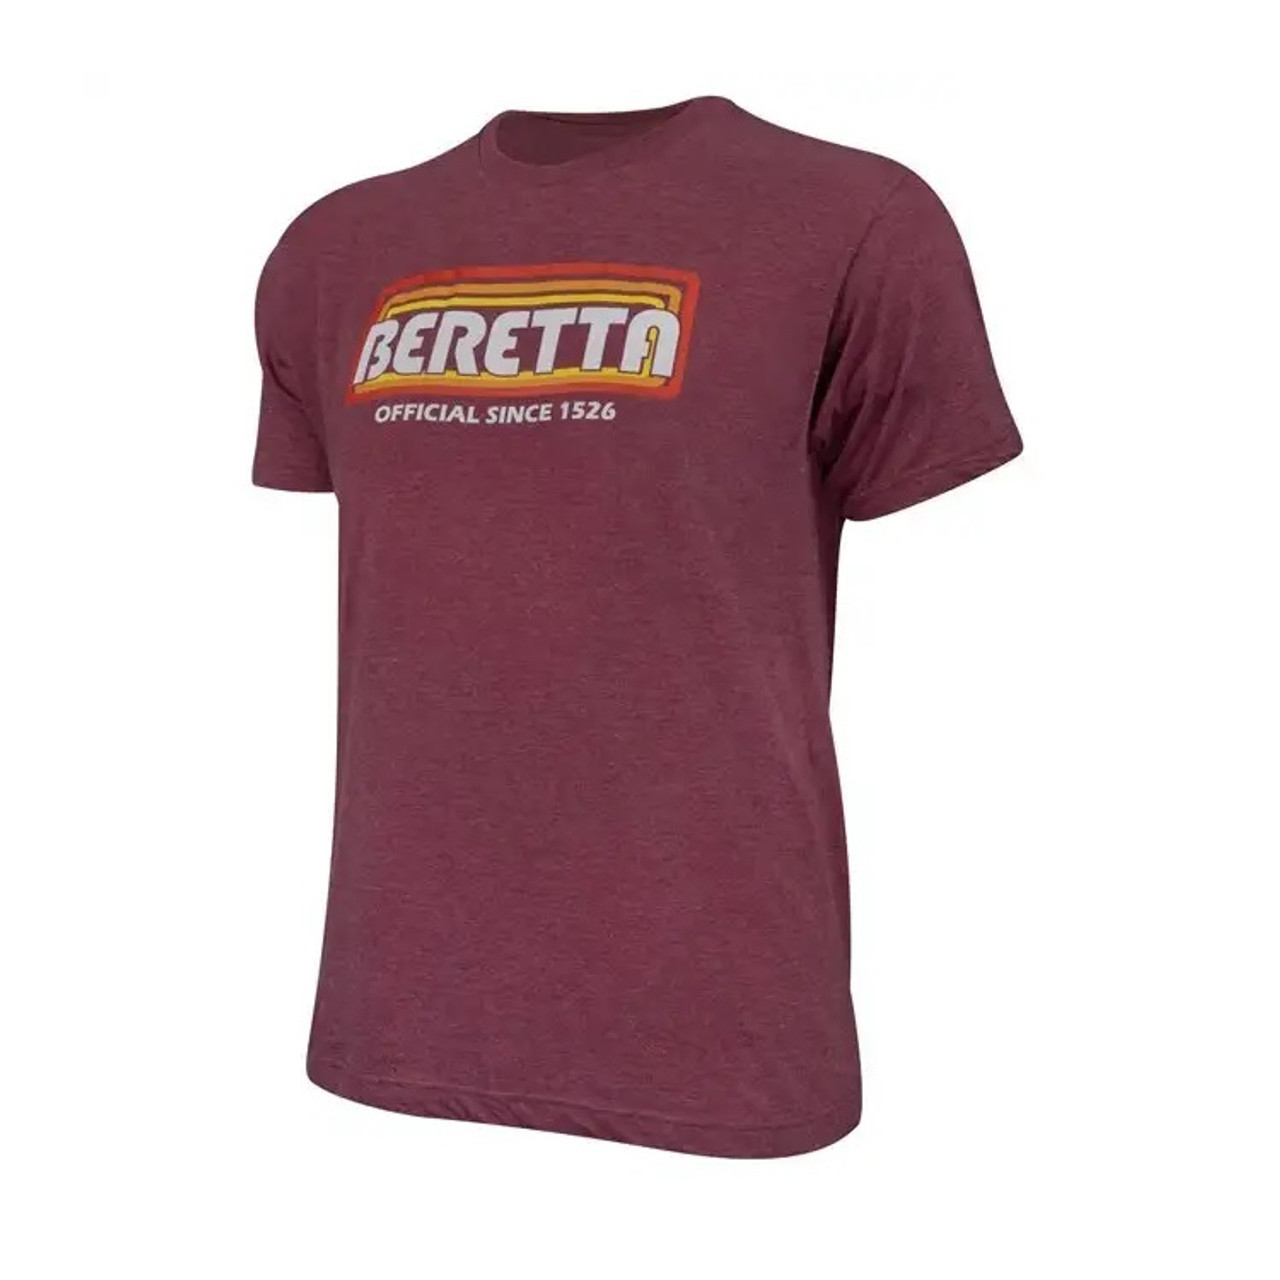 Beretta Retro Bloq T-Shirt Maroon, Large